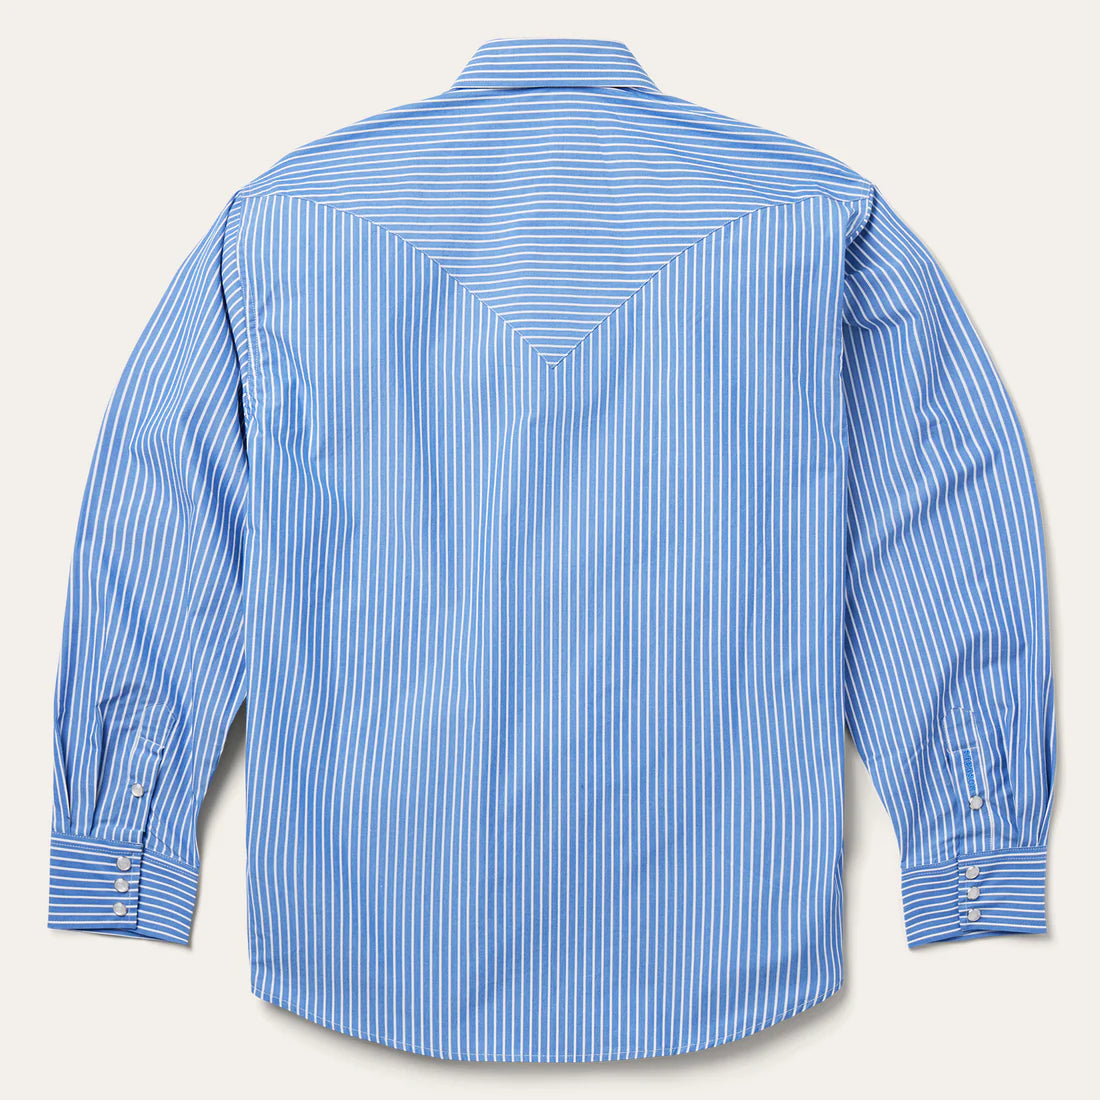 Stetson Snap Candy Stripe - Periwinkle Shirt